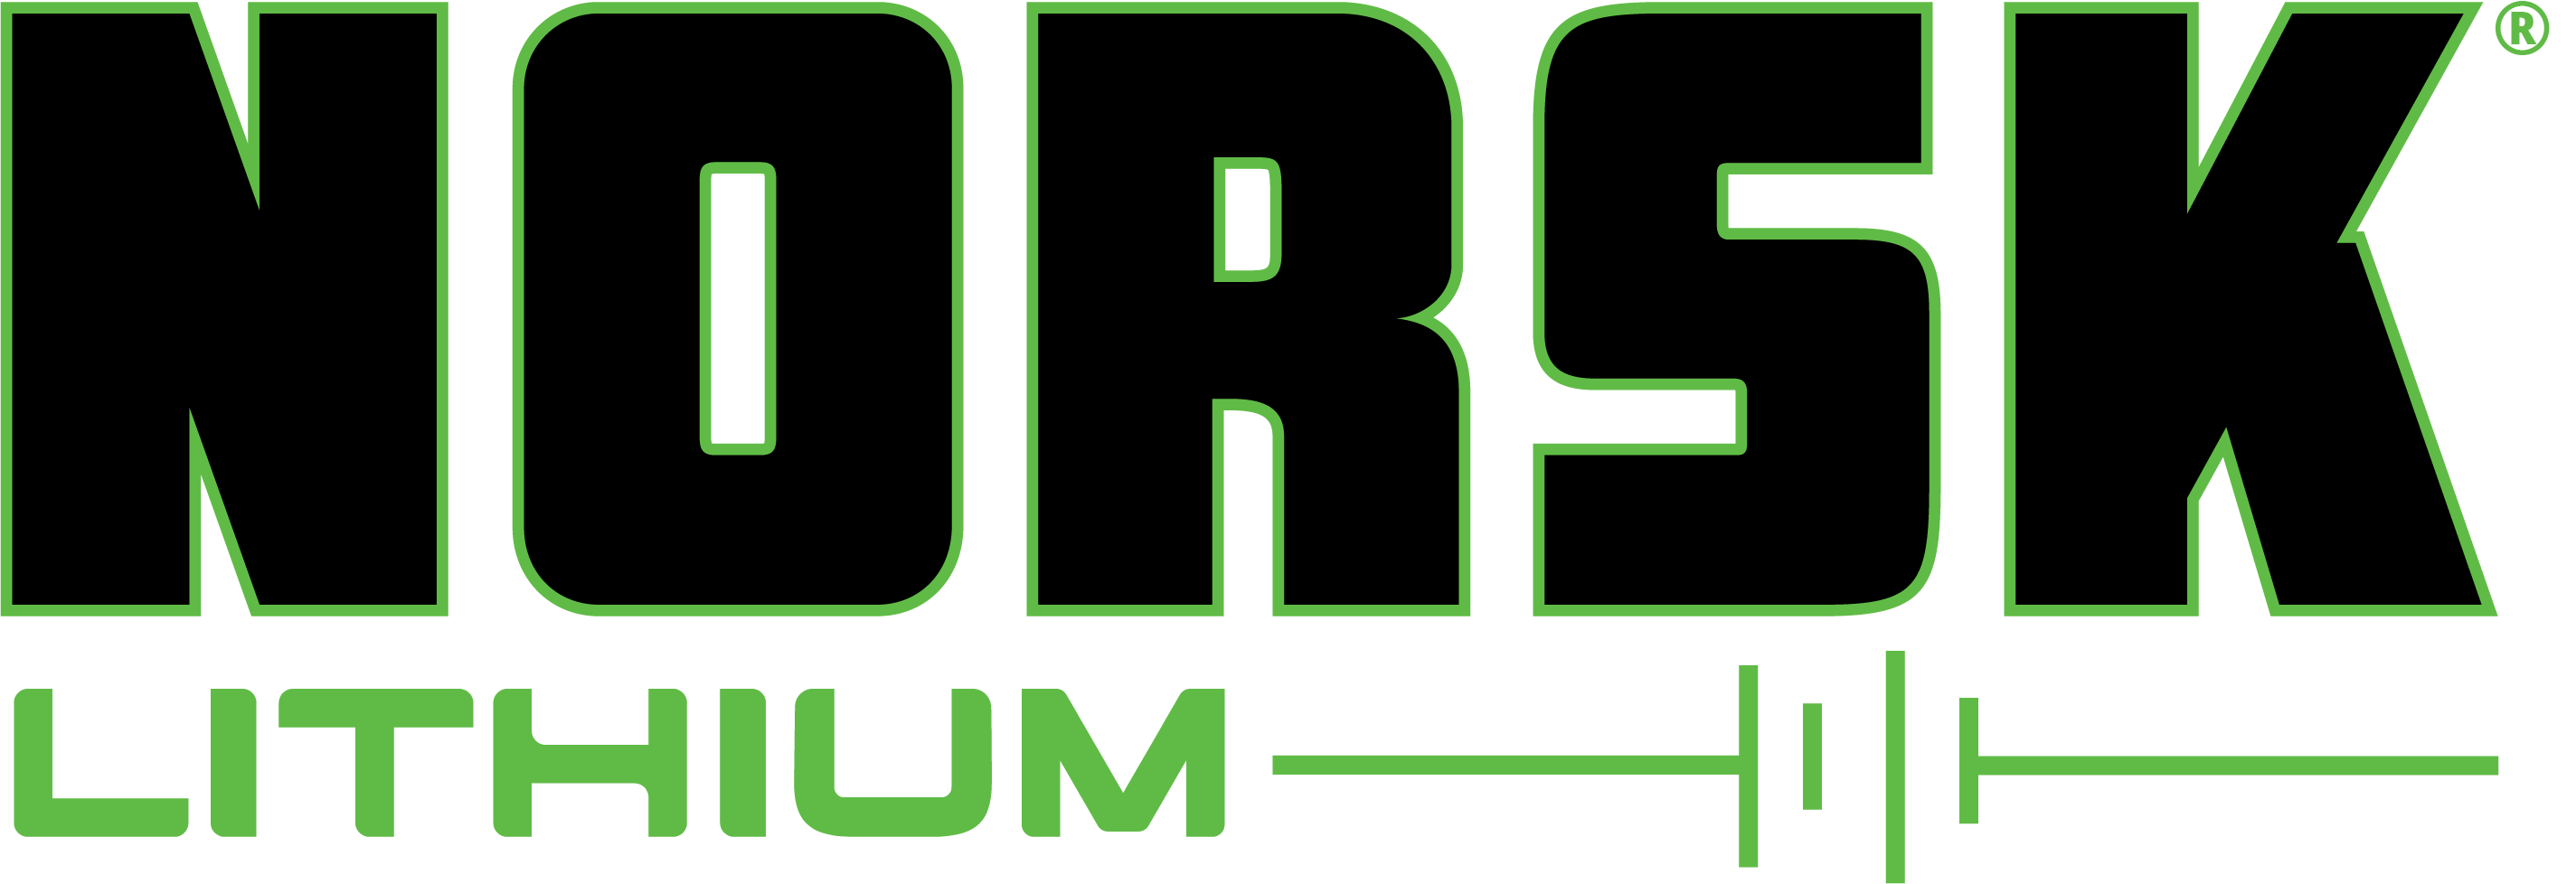 Norsk Lithium menu logo - Black and Green